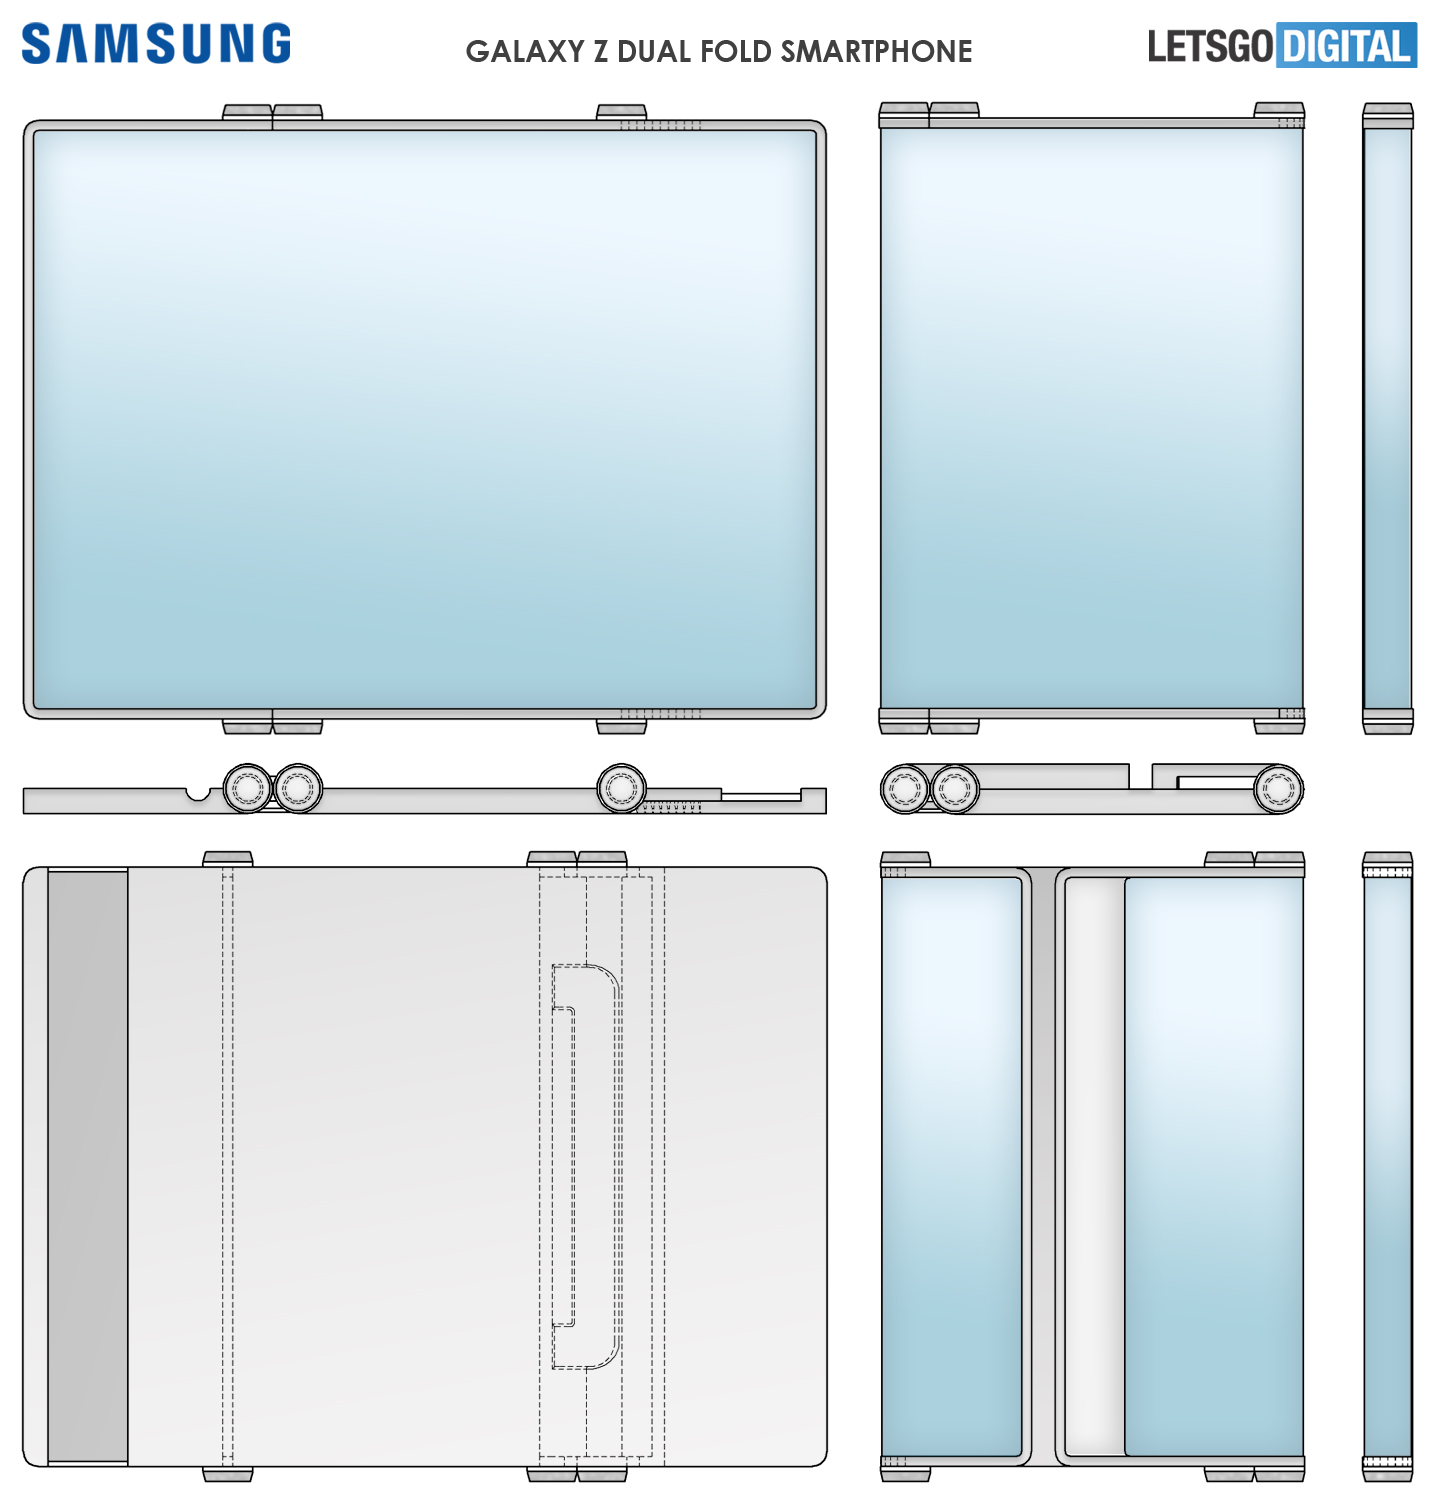 Samsung dual fold smartphone